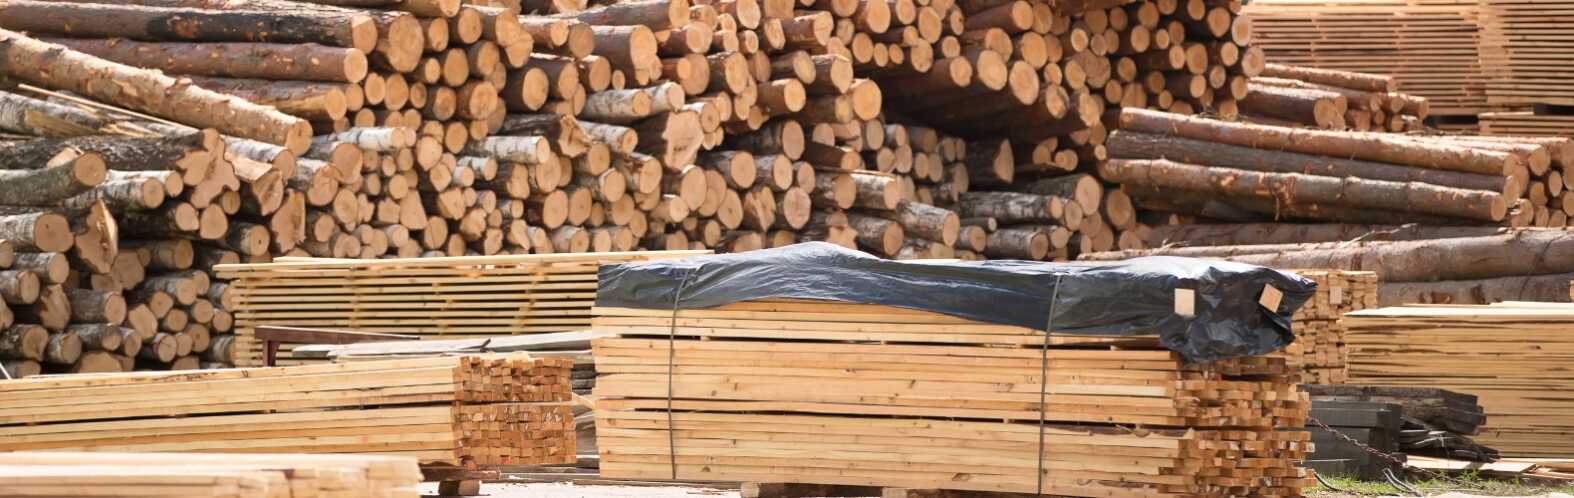 rising lumber costs